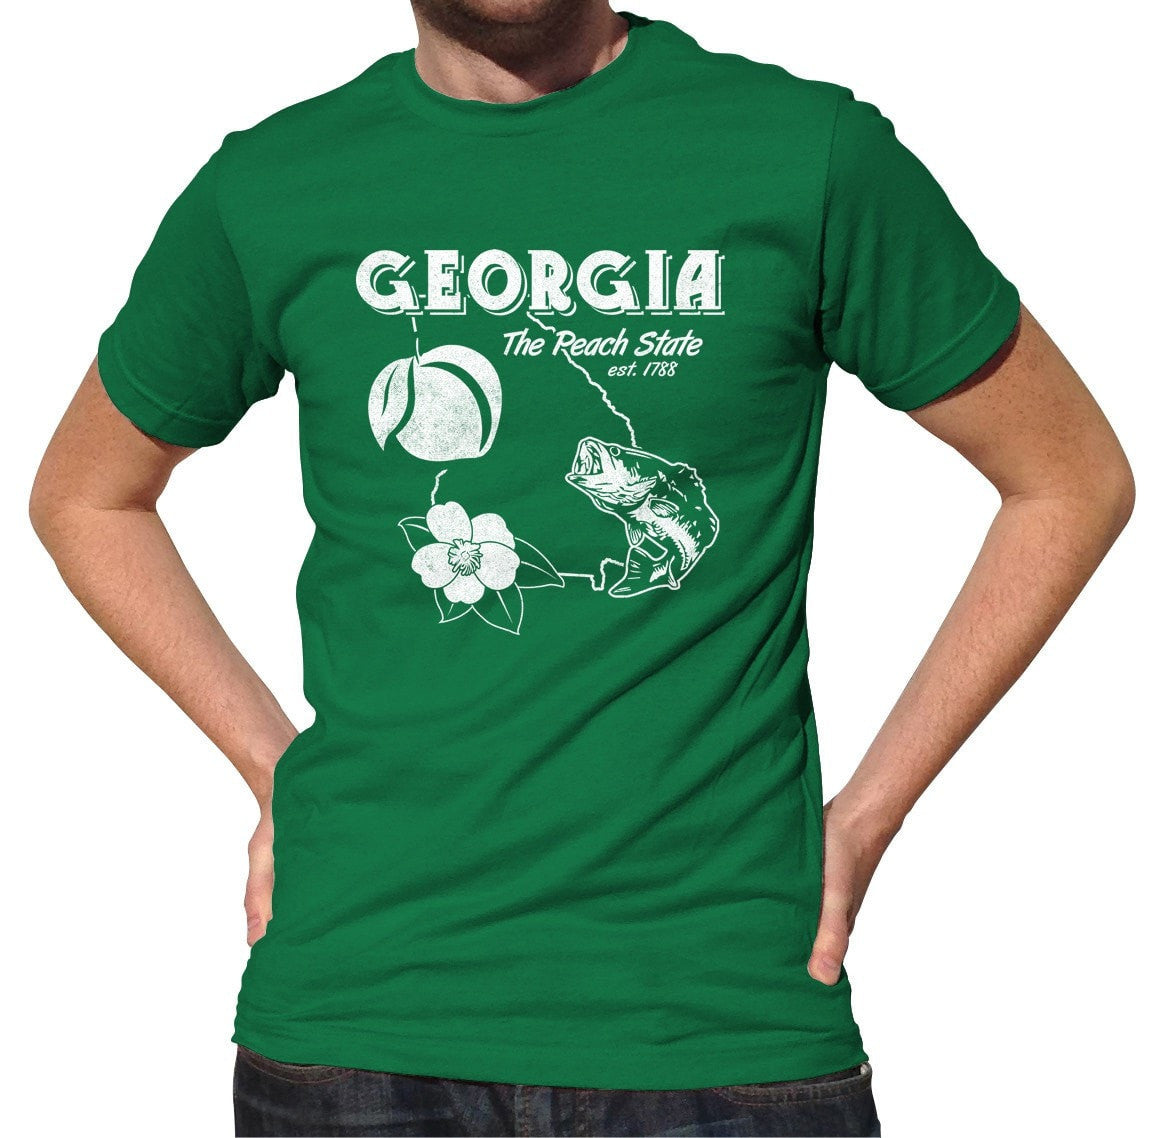 Men's Georgia T-Shirt